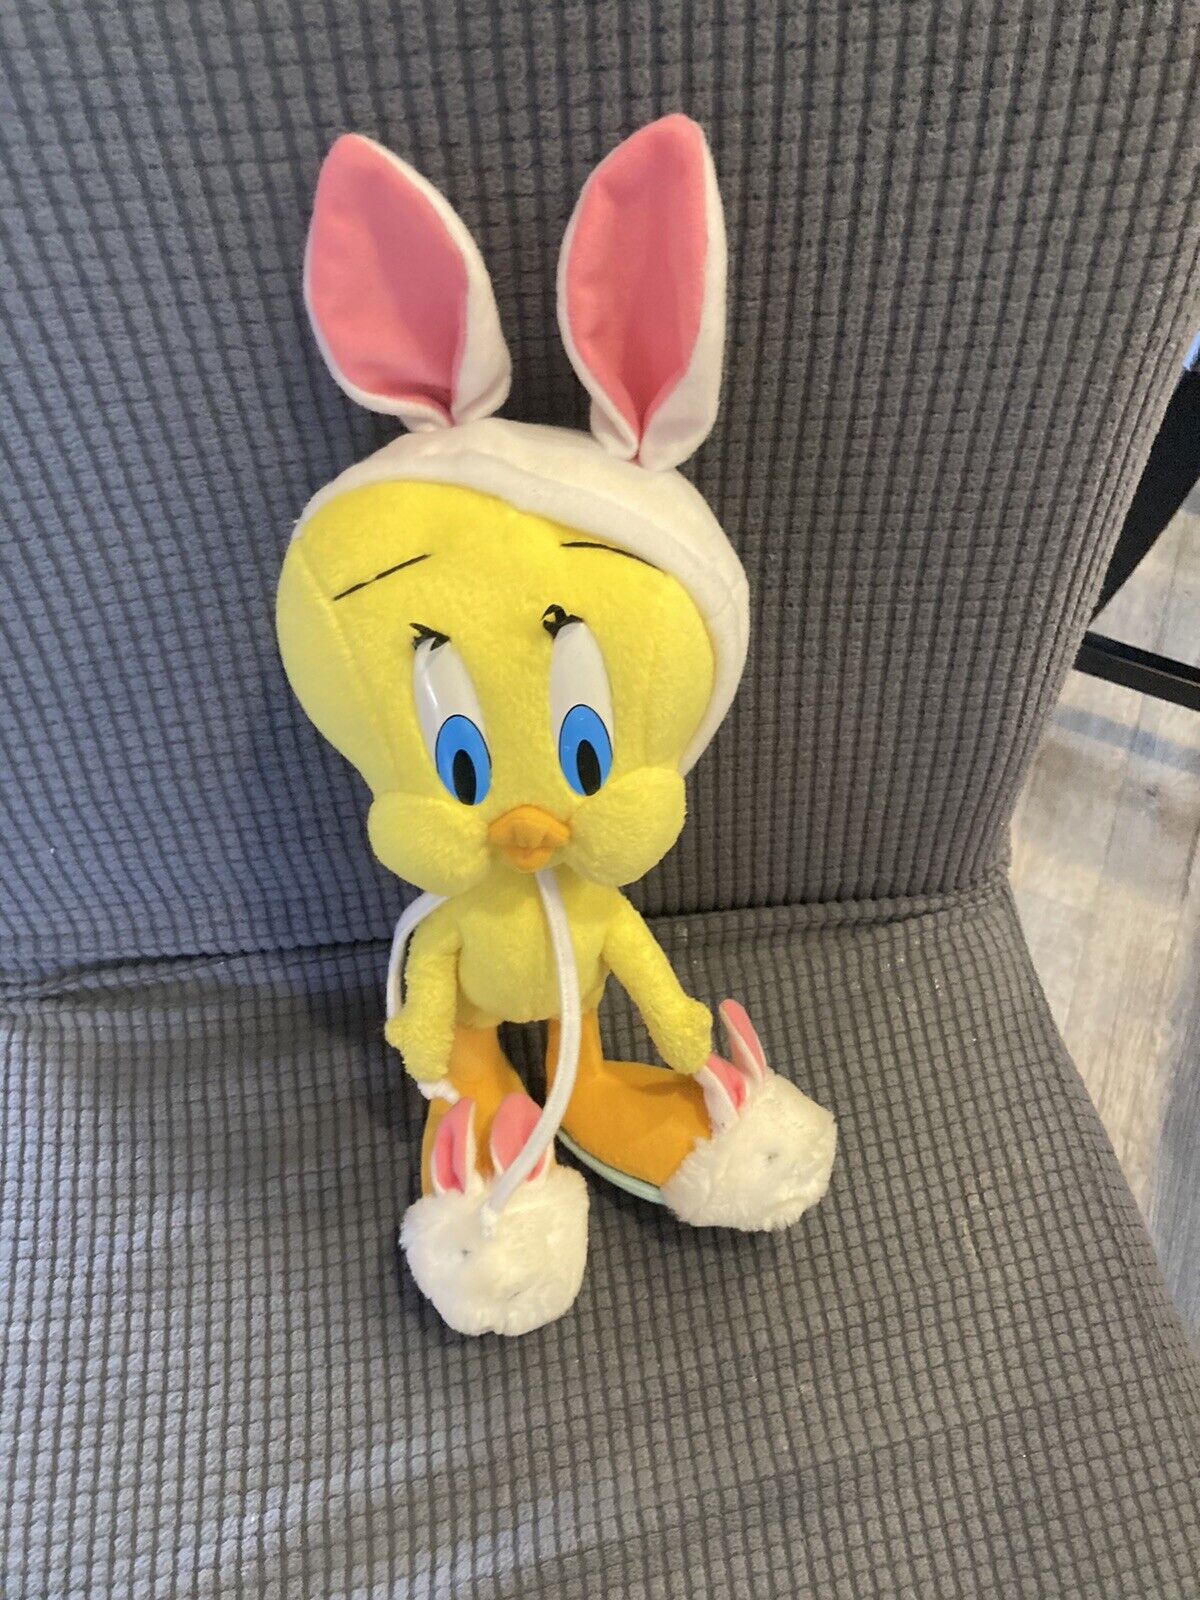 Easter Tweety Plush Looney Tunes Yellow Bunny  Slippers 10” Stuffed Animal Toy